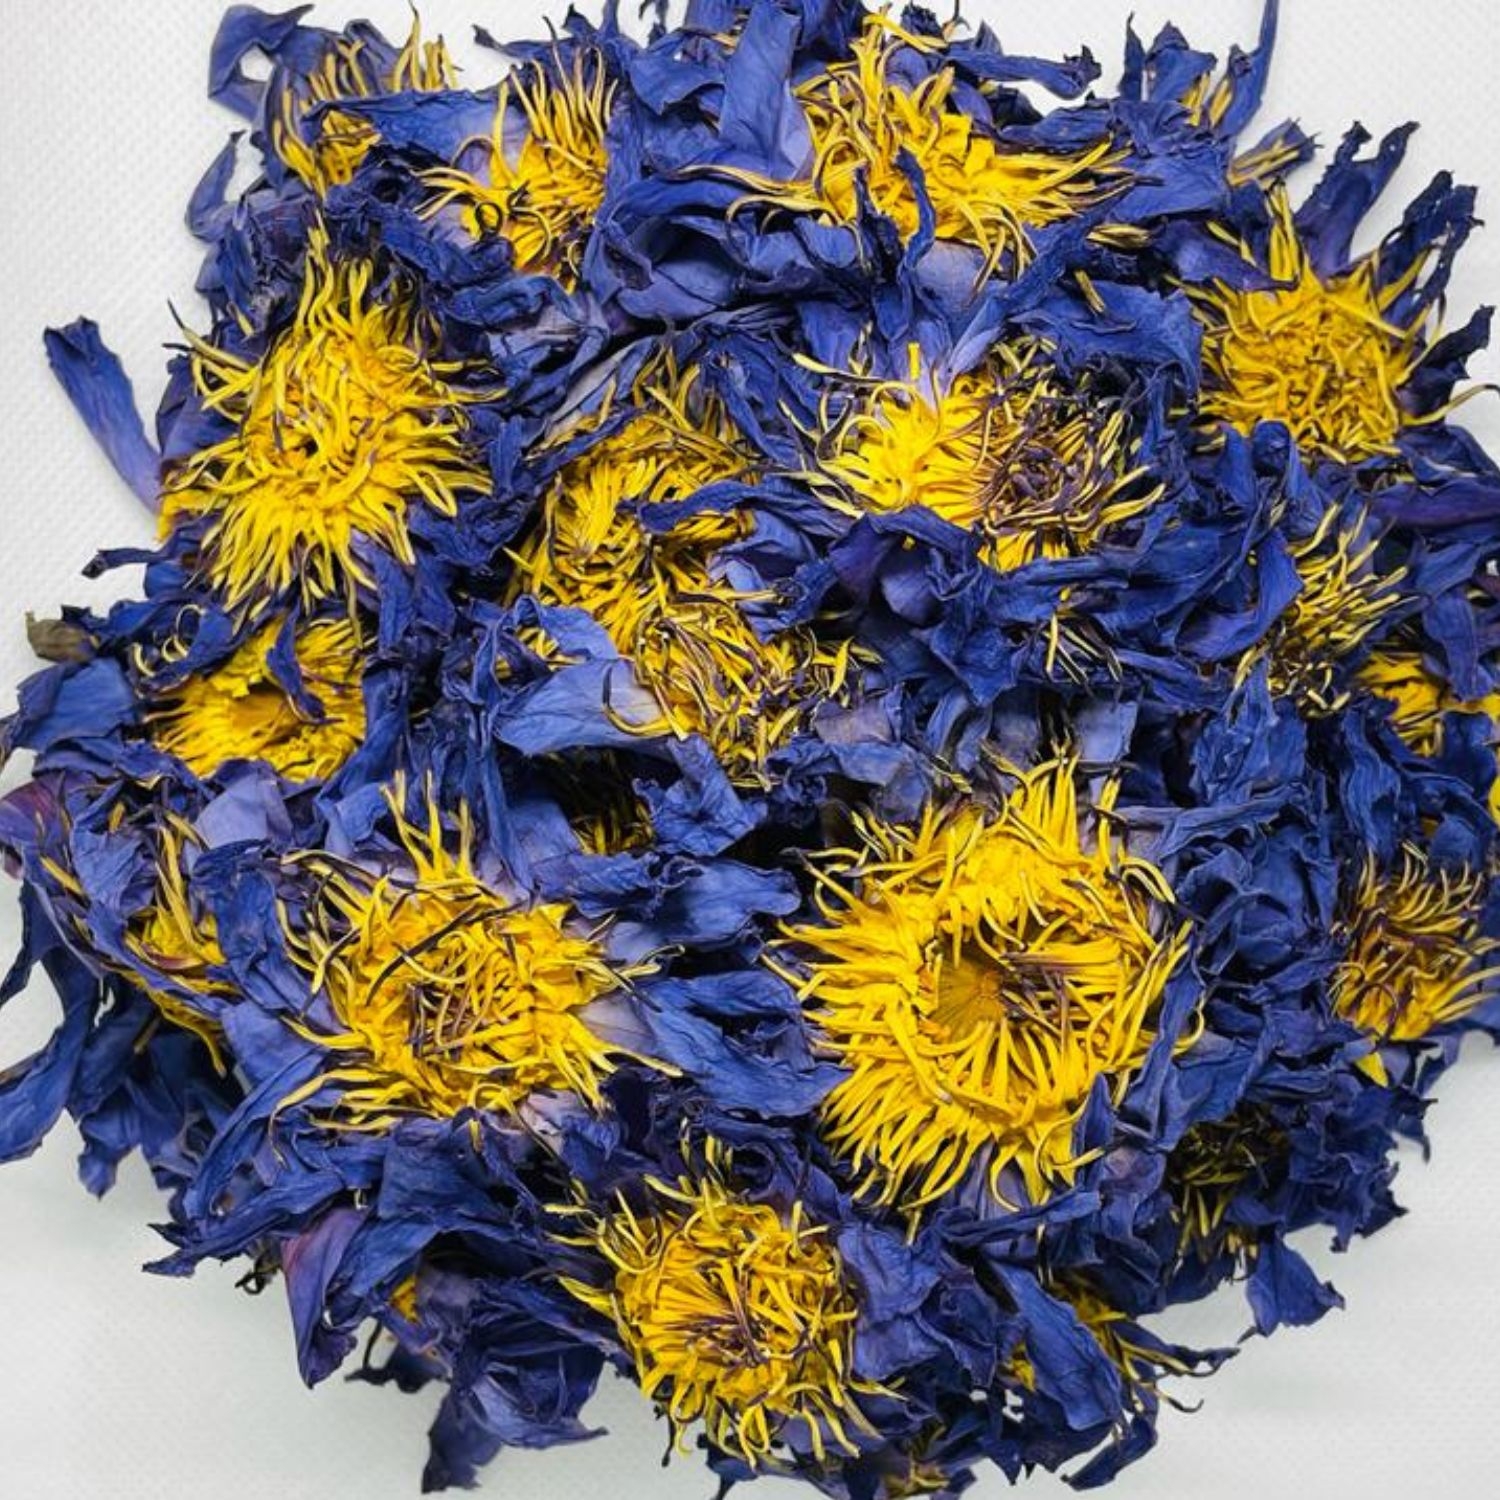 Whole Blue Lotus Flowers (pesticide free)